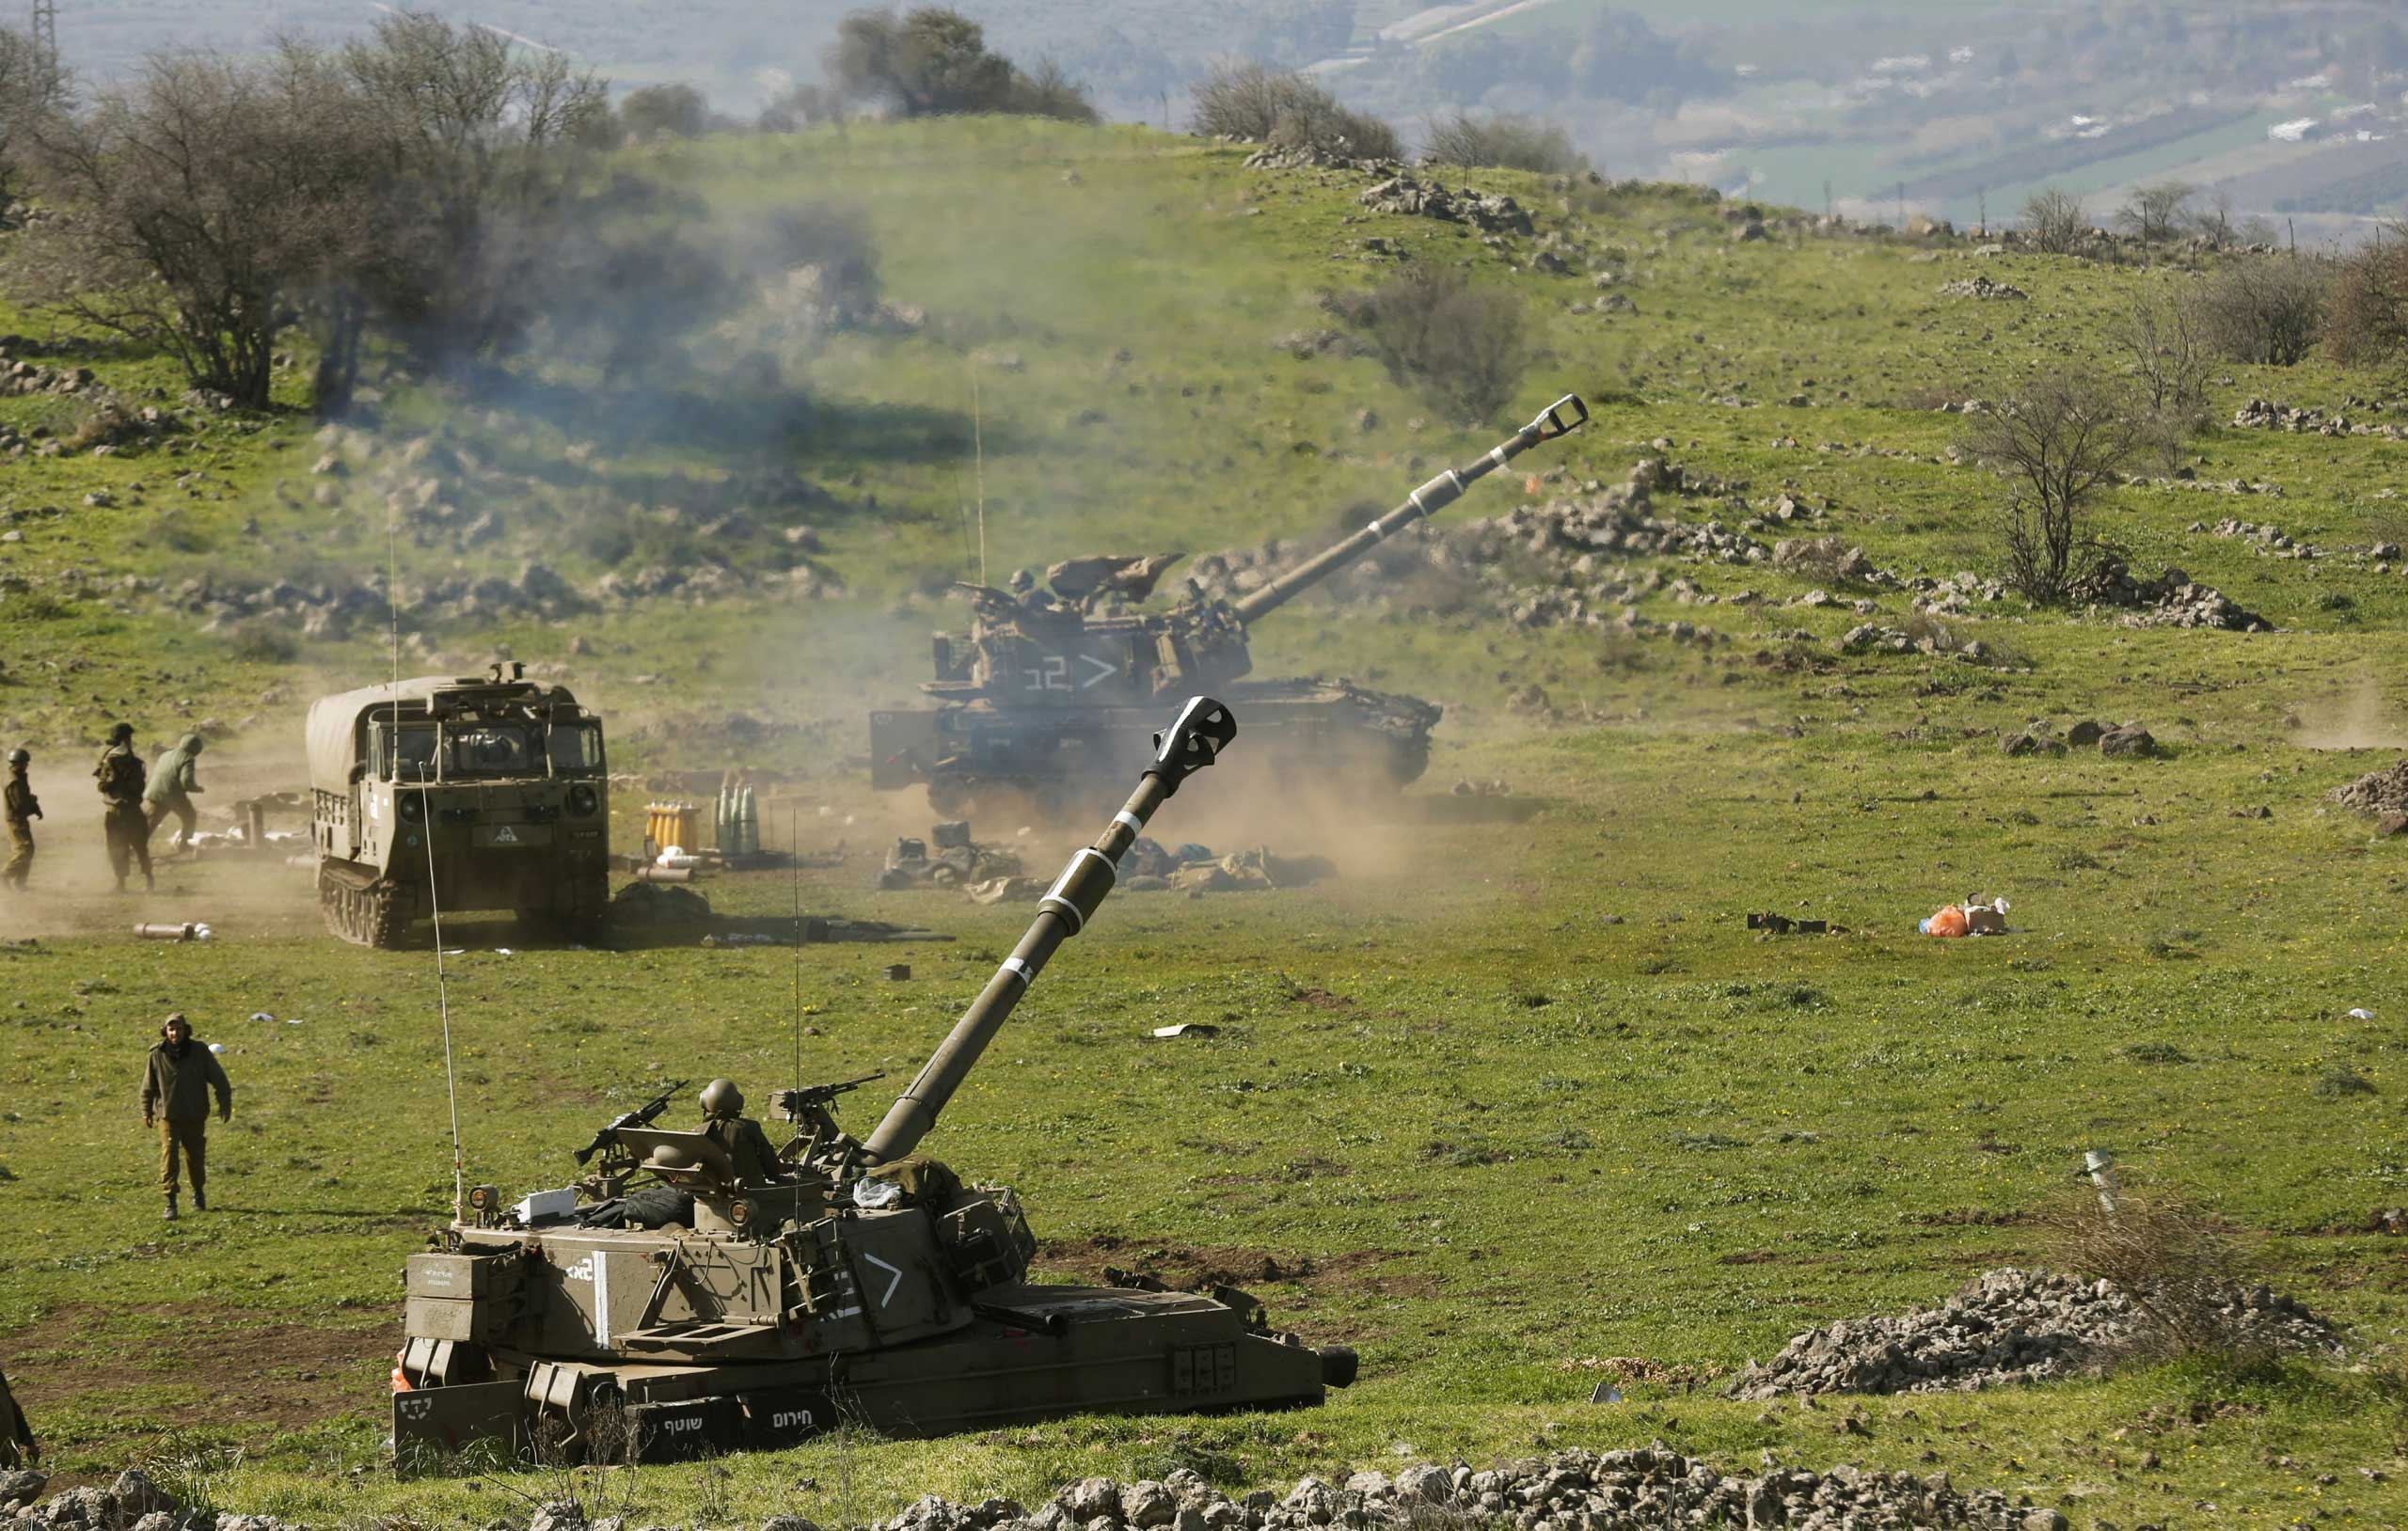 Anti-tank missile hits Israeli army vehicle near Lebanon border